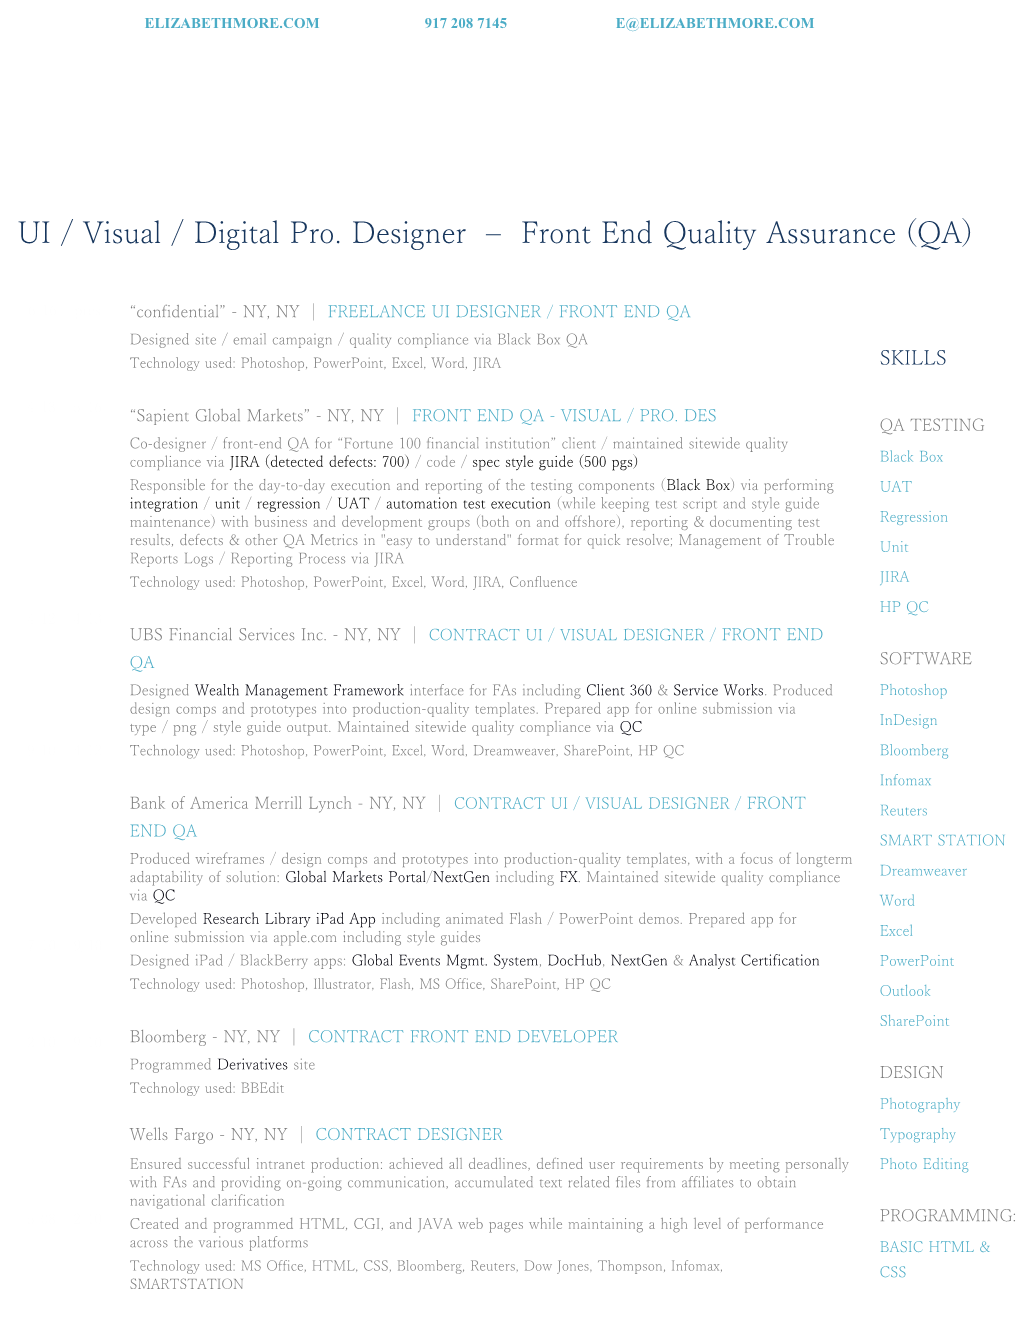 Designed Site / Email Campaign / Qualitycompliance Via Black Box QA